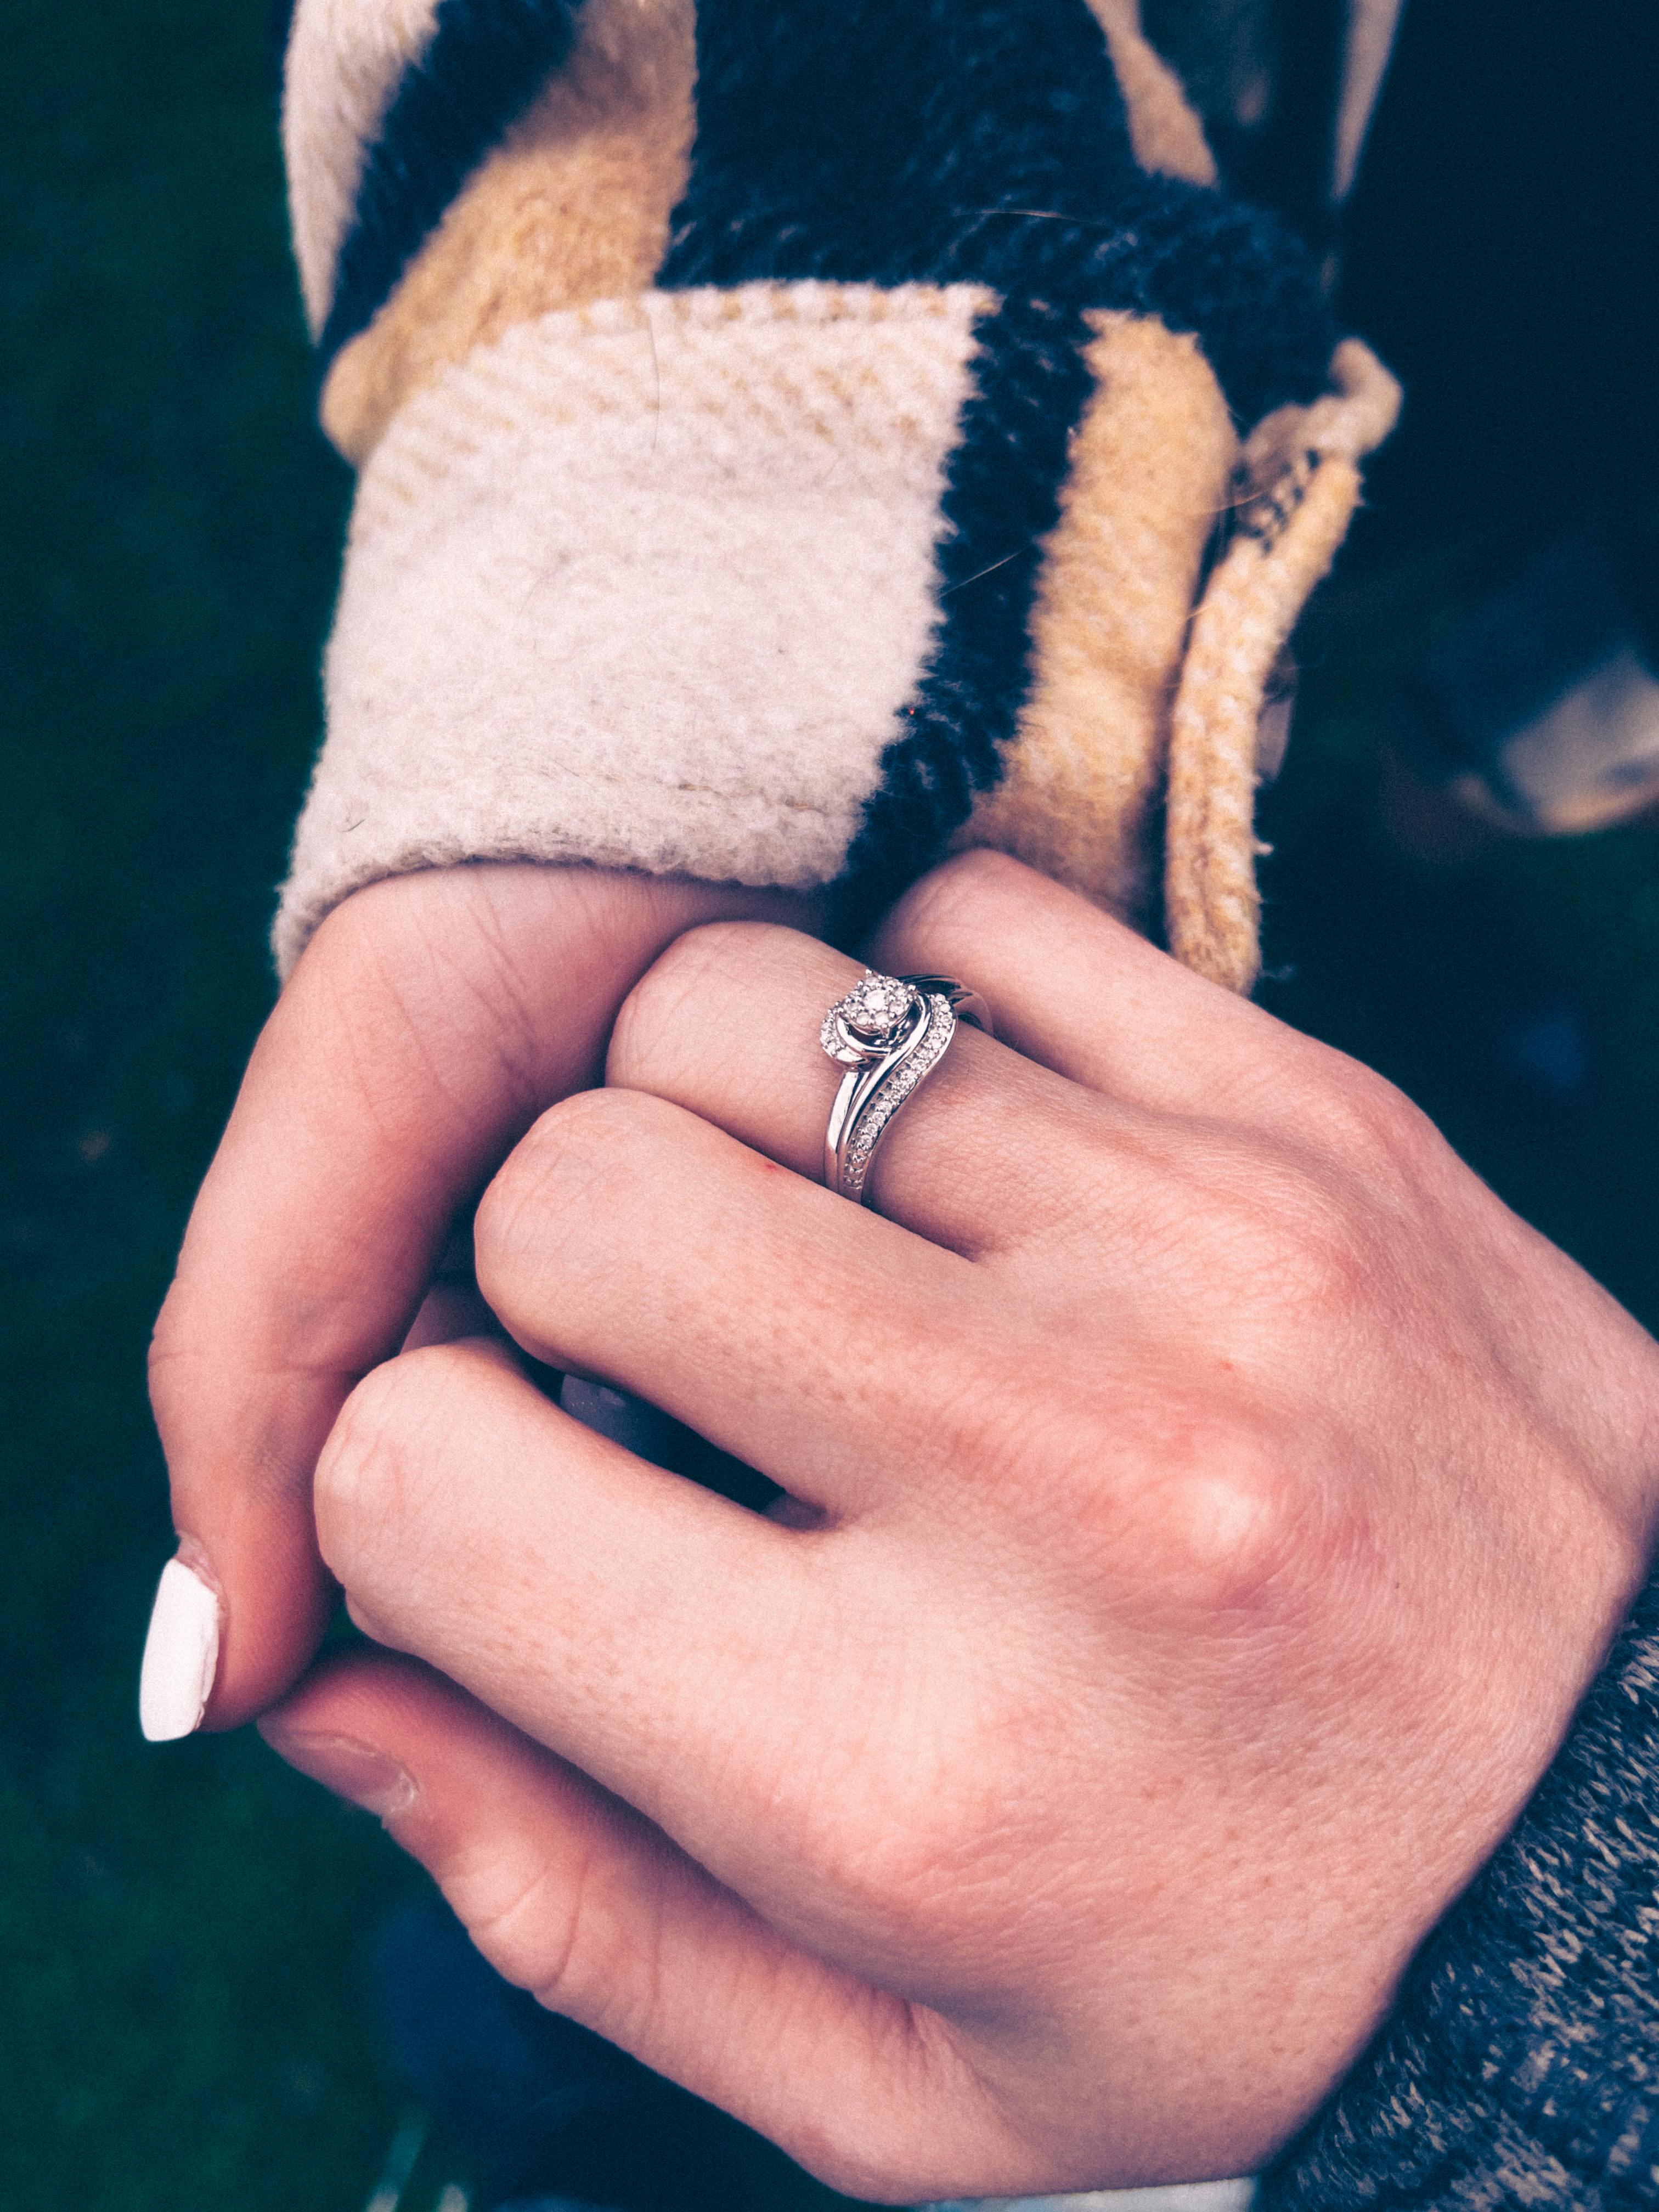 Premium Photo | Women's and men's hands wedding rings